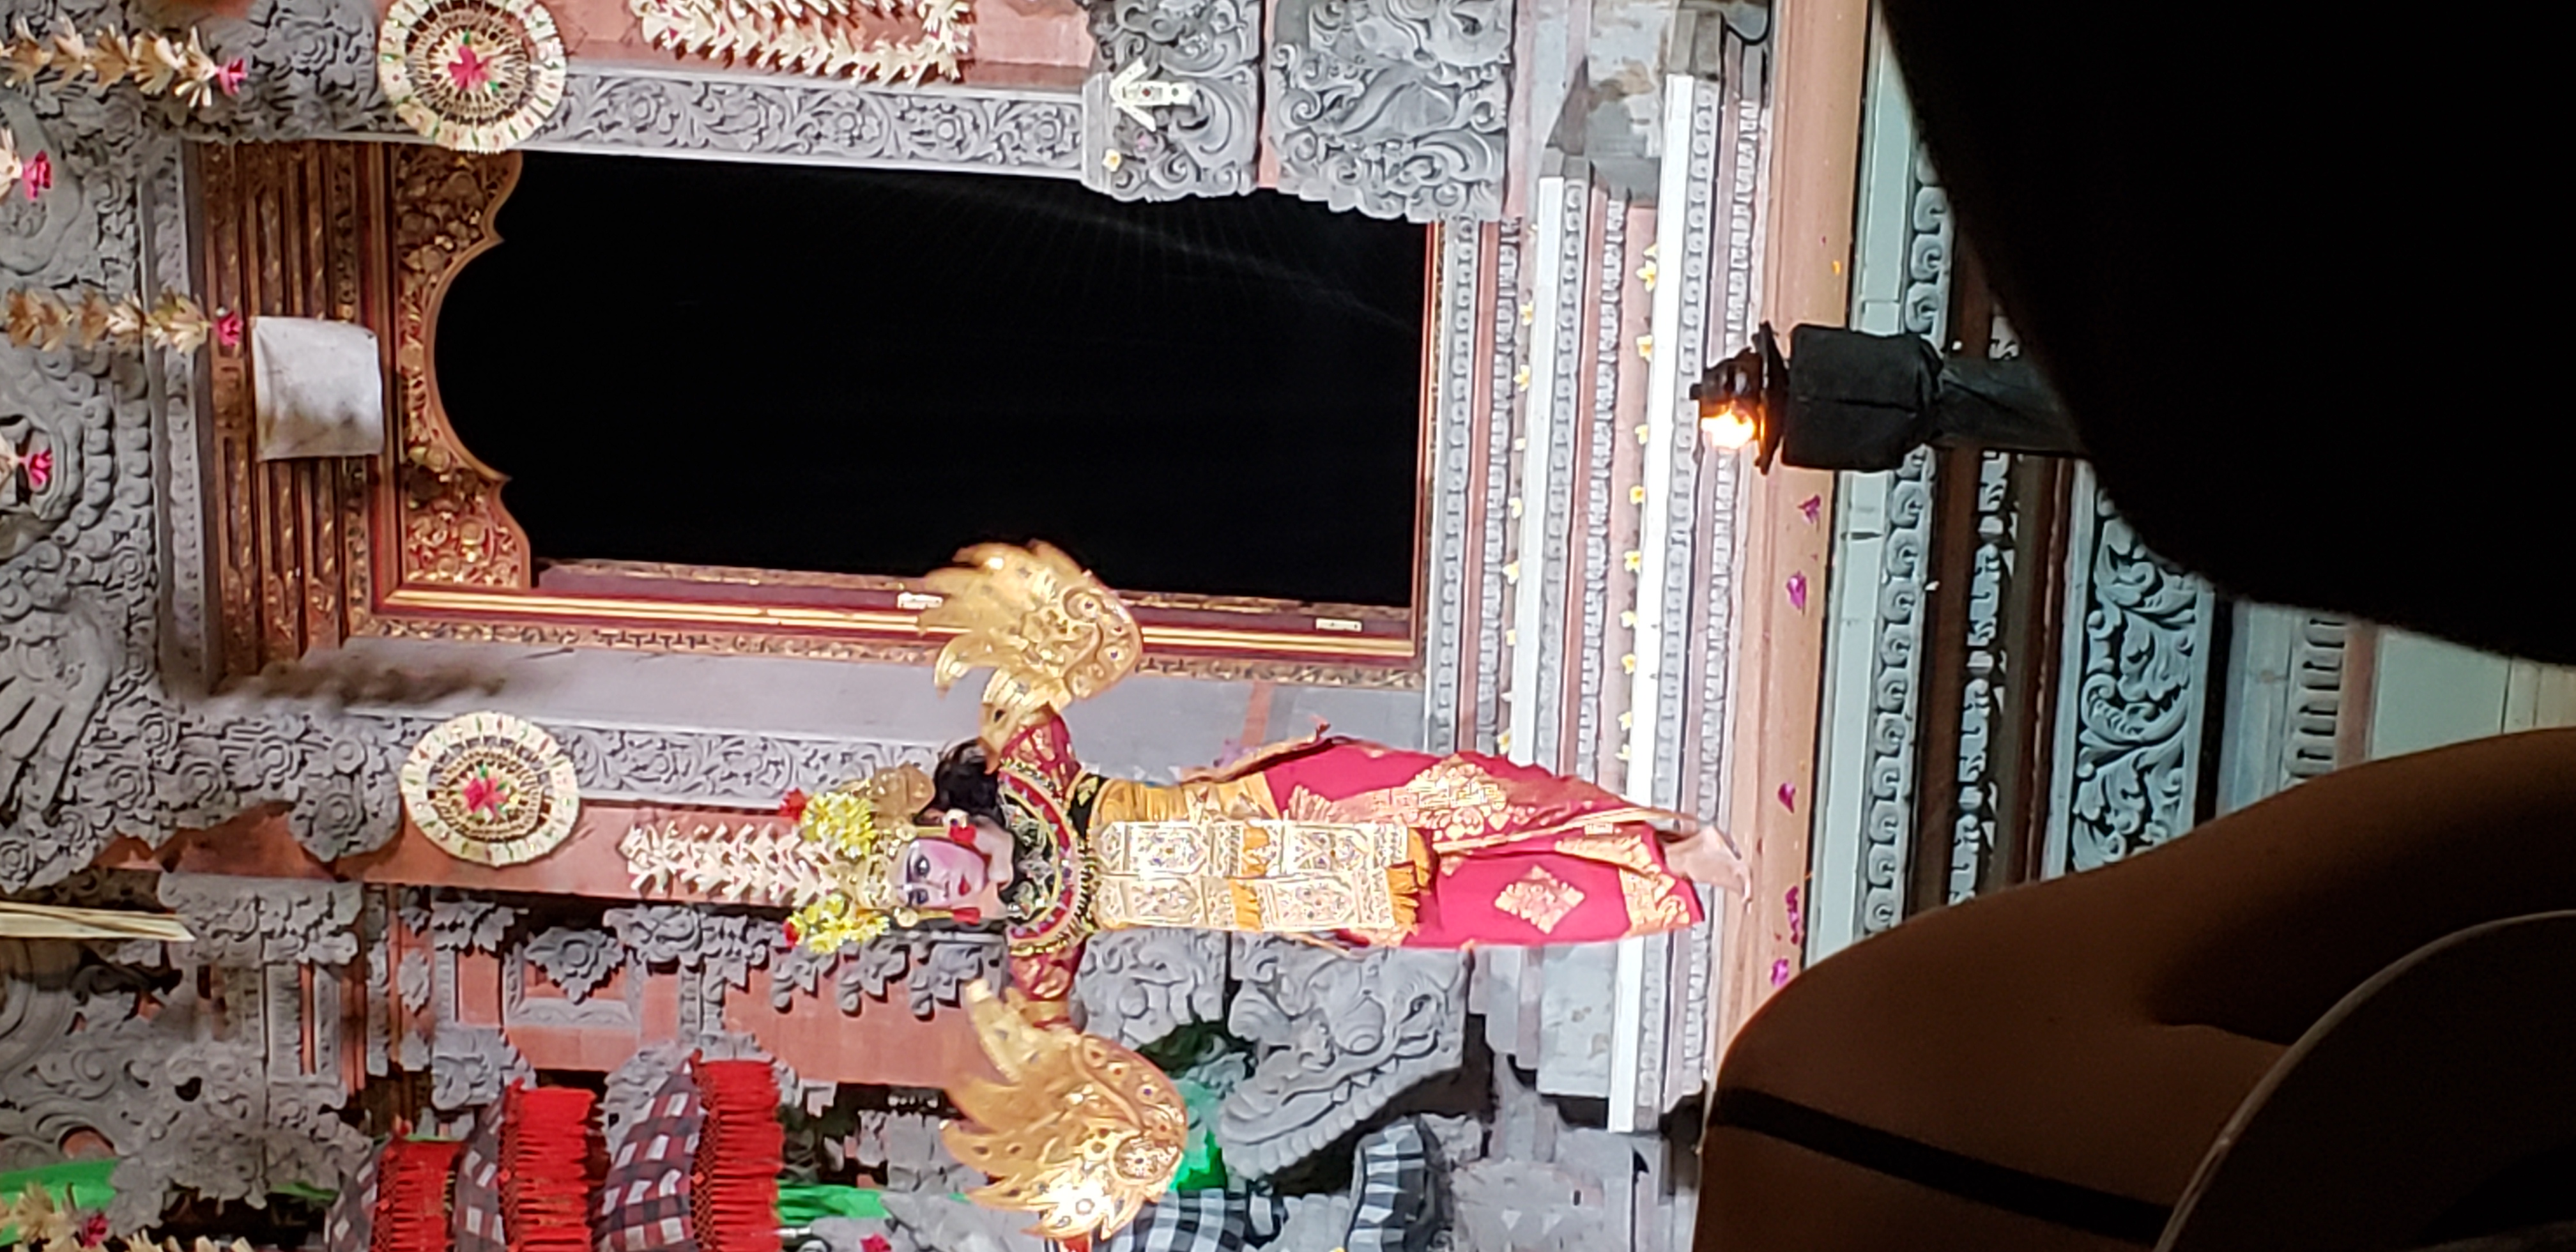 2018 Southeast Asia Trip Day 7 - Ubud, Bali, Indonesia (Dicarik Warung Balinese Cooking Class, Turmeric Stained Hands, Juwuk Manis Rice Fields Walk, Saraswati Temple, Scooter Rides, Wayan's Homemade Balinese Meal, Legong and Barong Dance Pura Dalem Ubud)